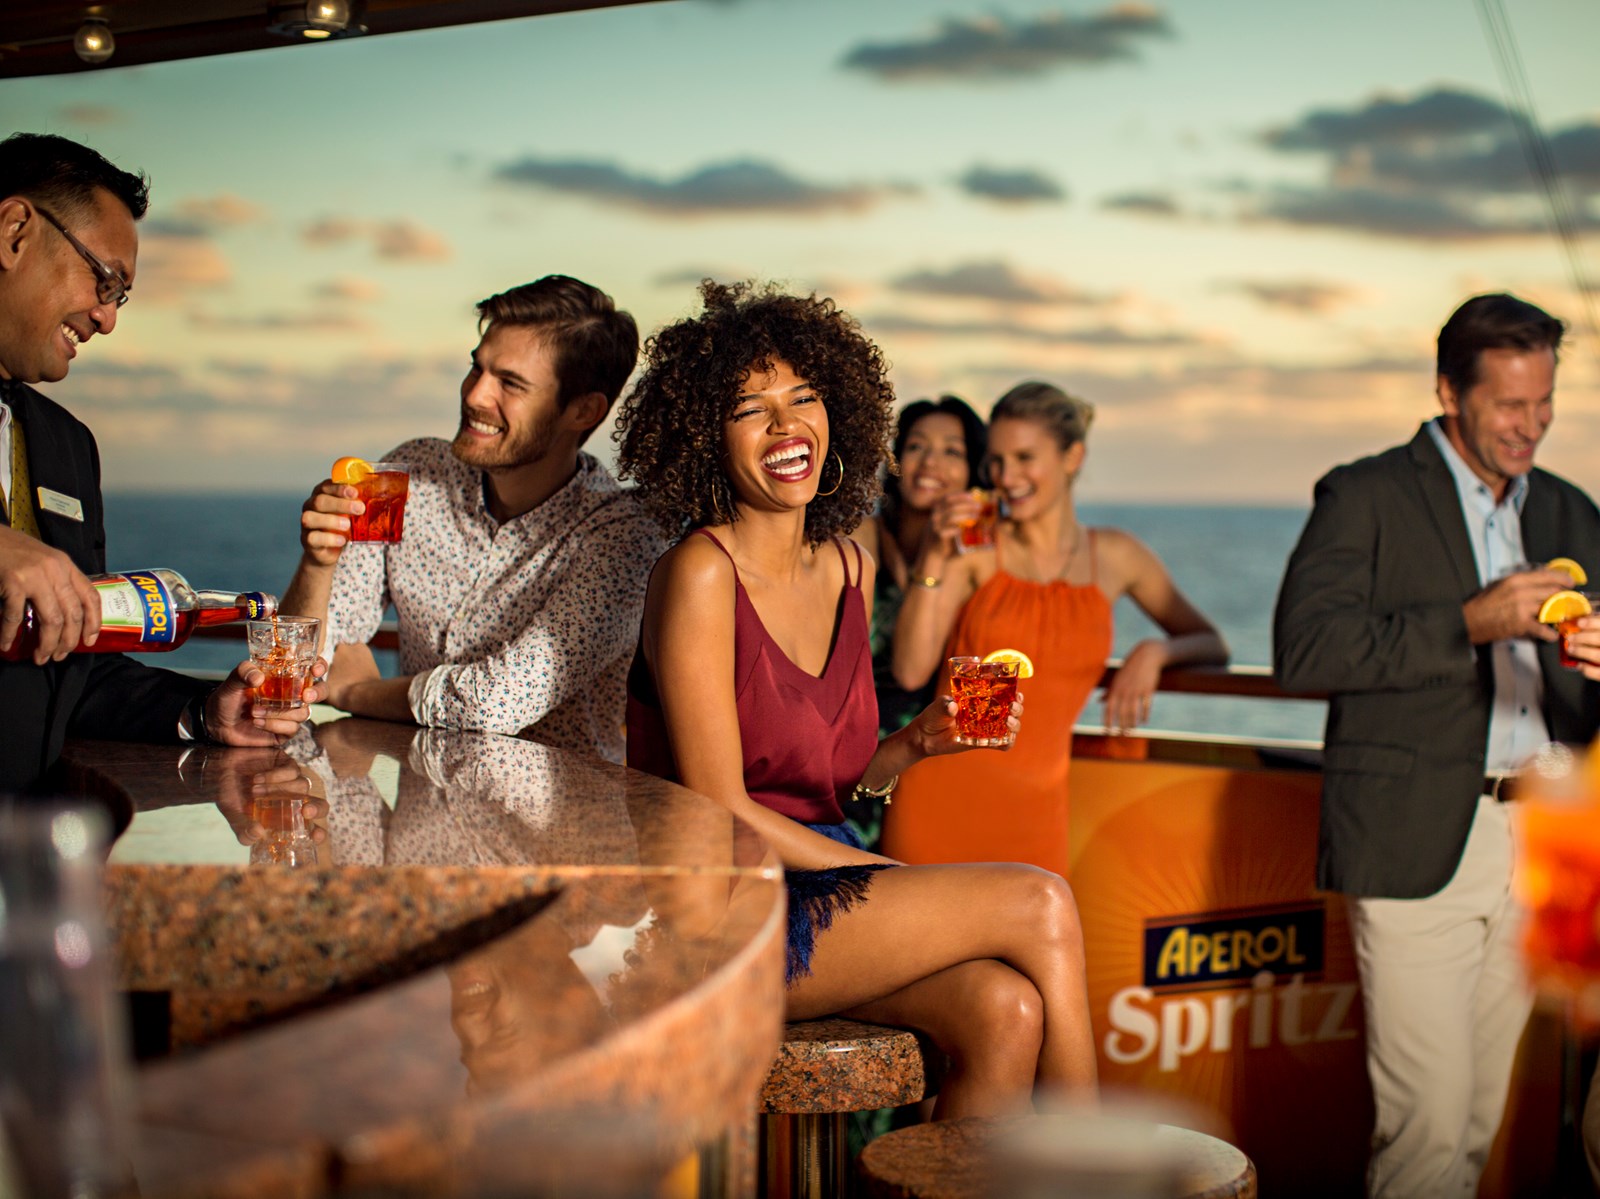 Costa Cruises Aperol bar